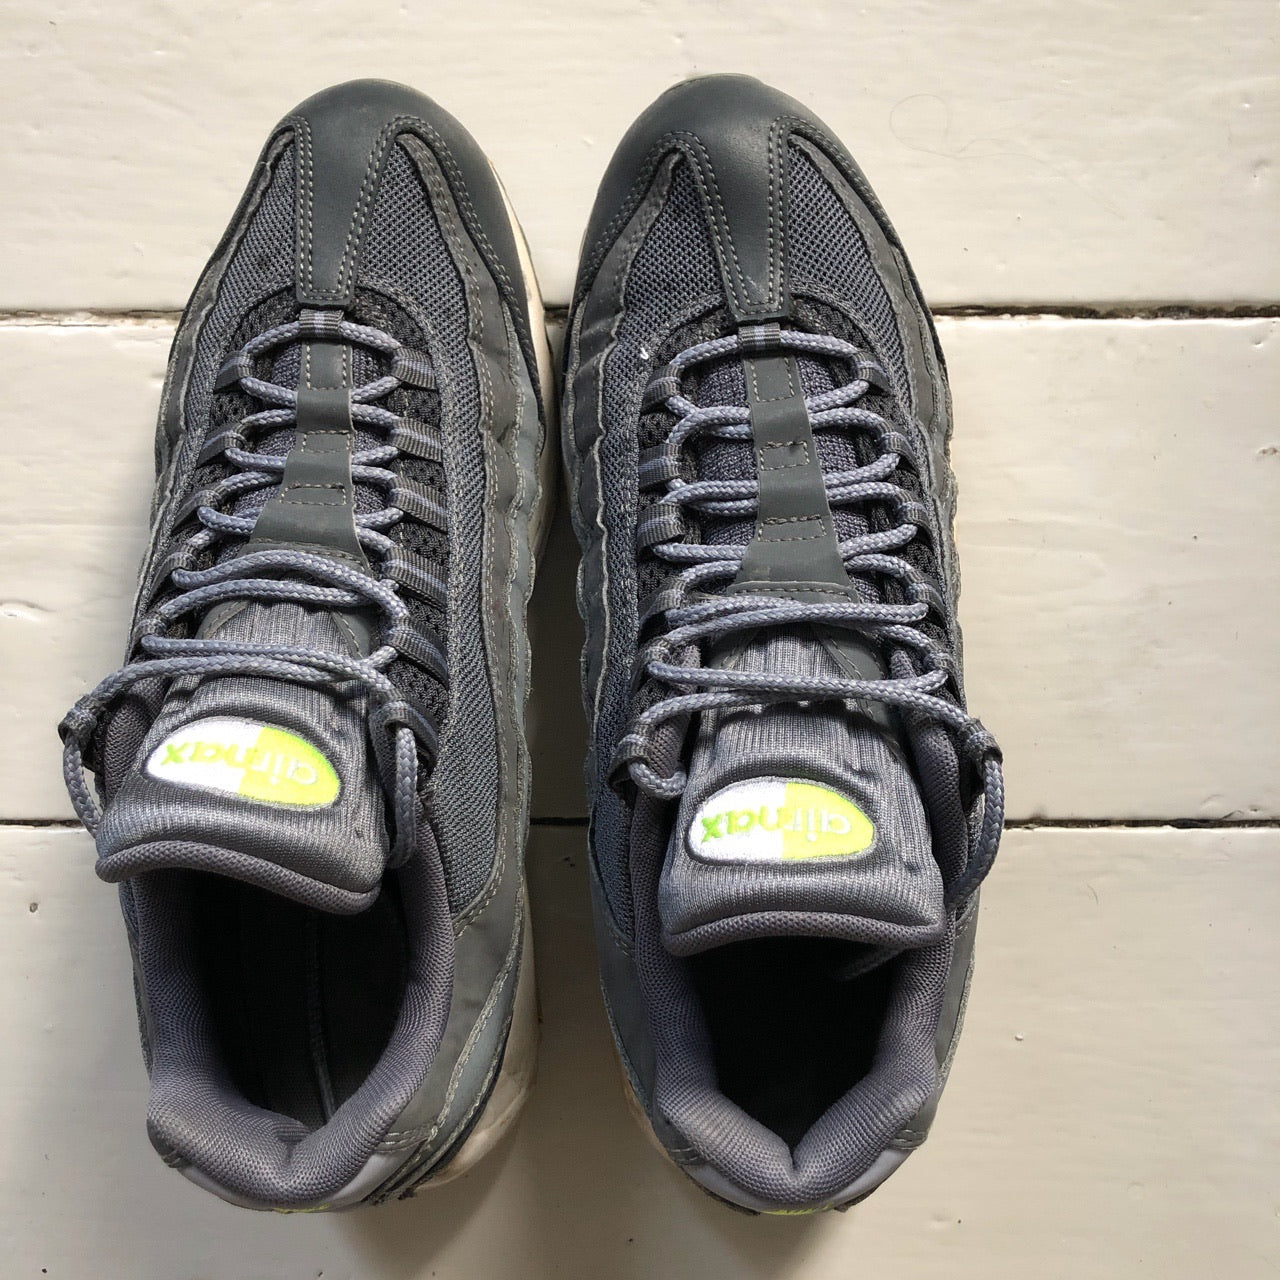 Nike Air Max 95 Neon and Grey (UK 10)